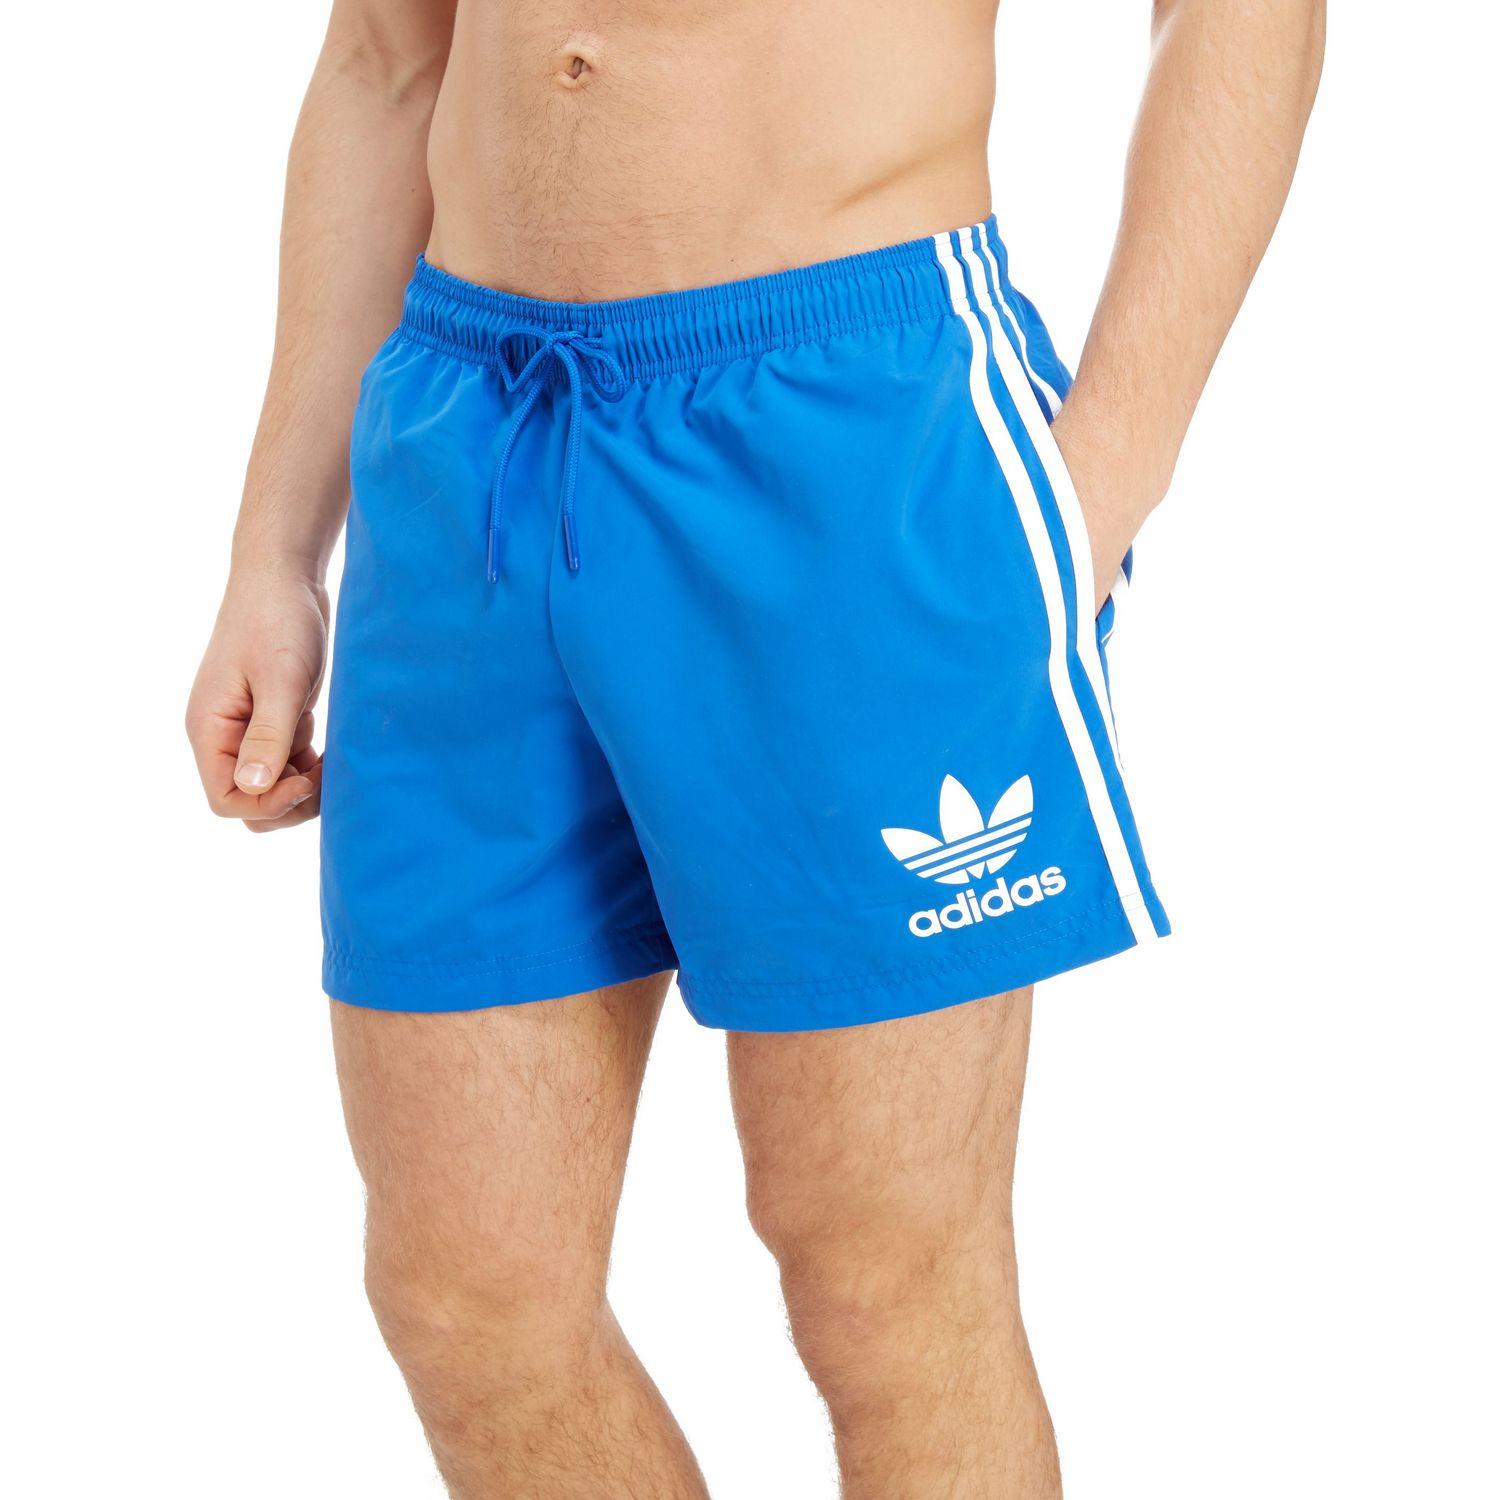 blue adidas swim shorts